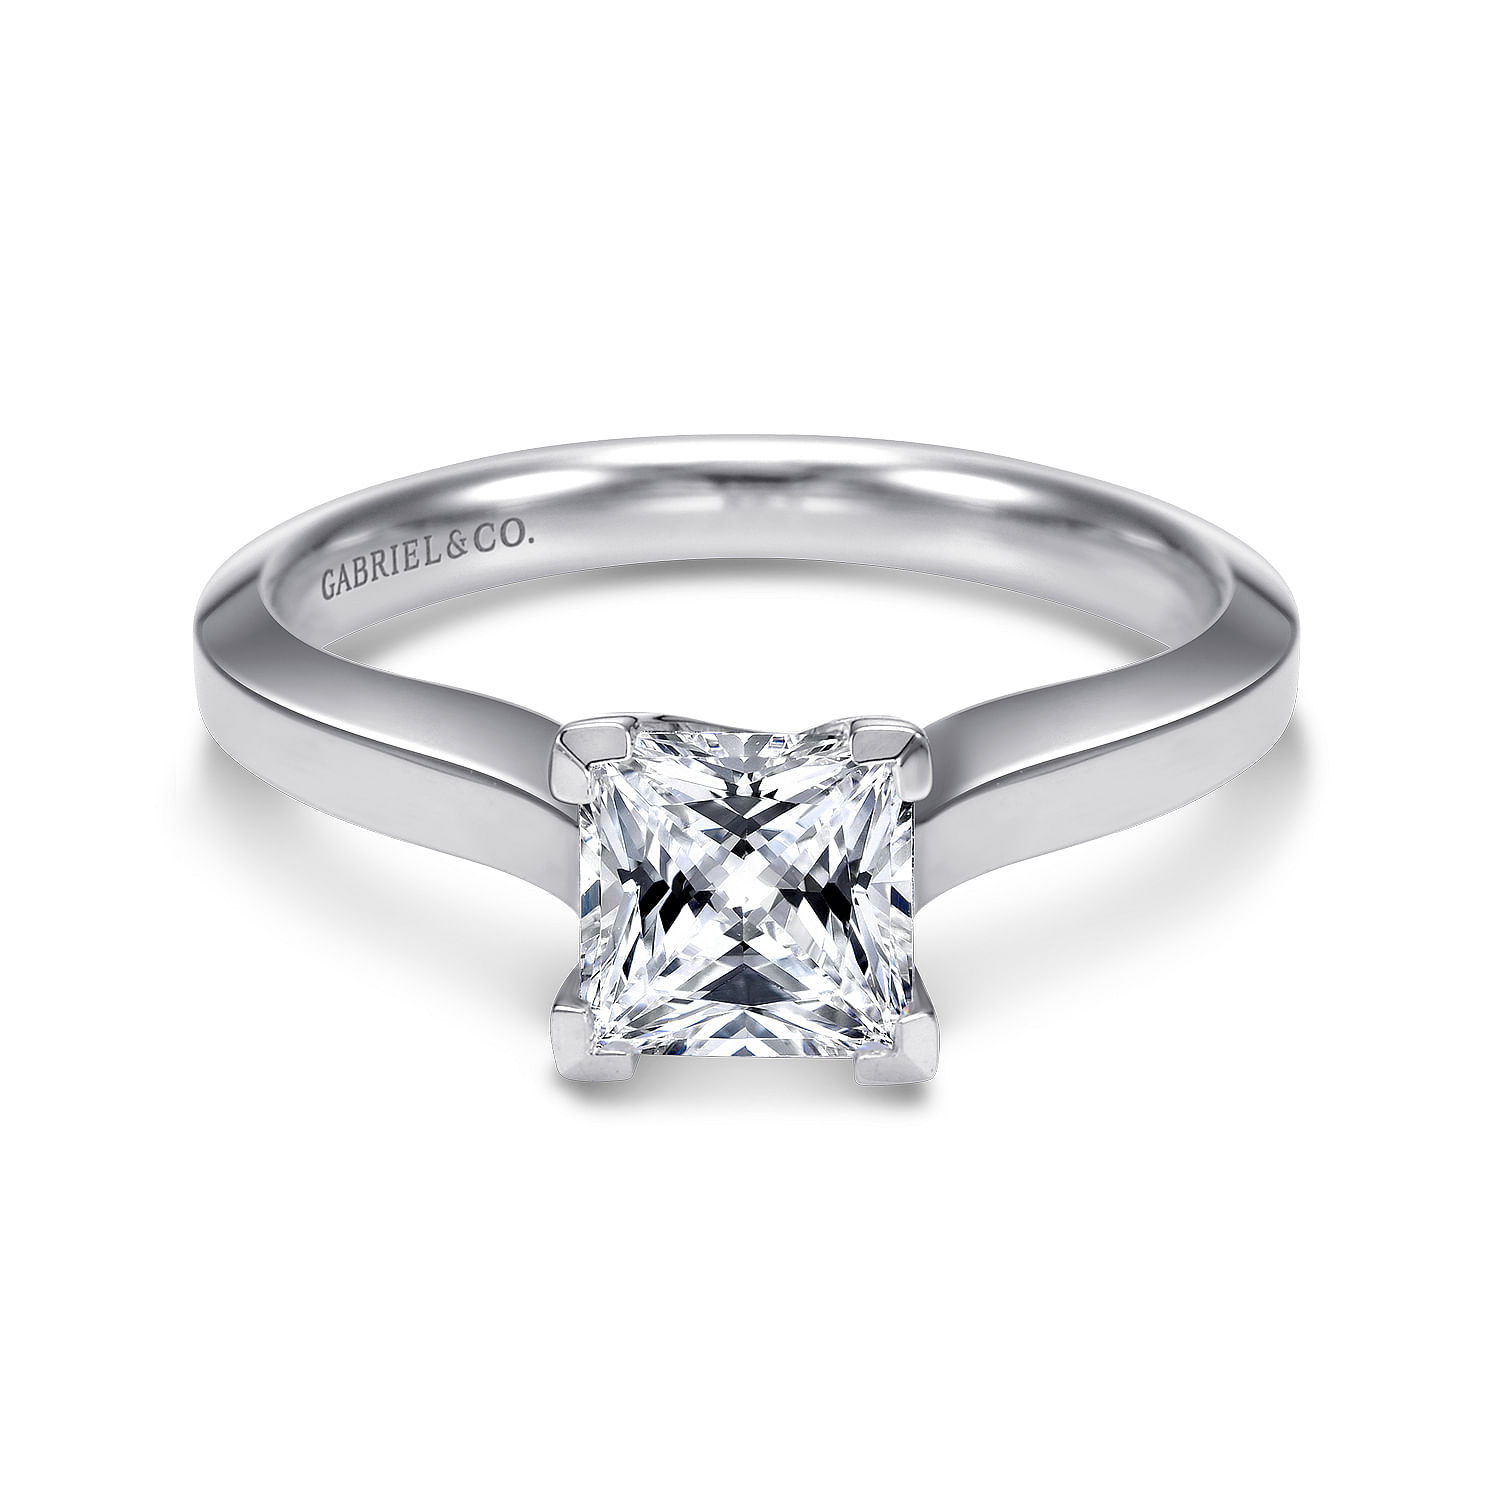 Hunter---14K-White-Gold-Princess-Cut-Diamond-Engagement-Ring1